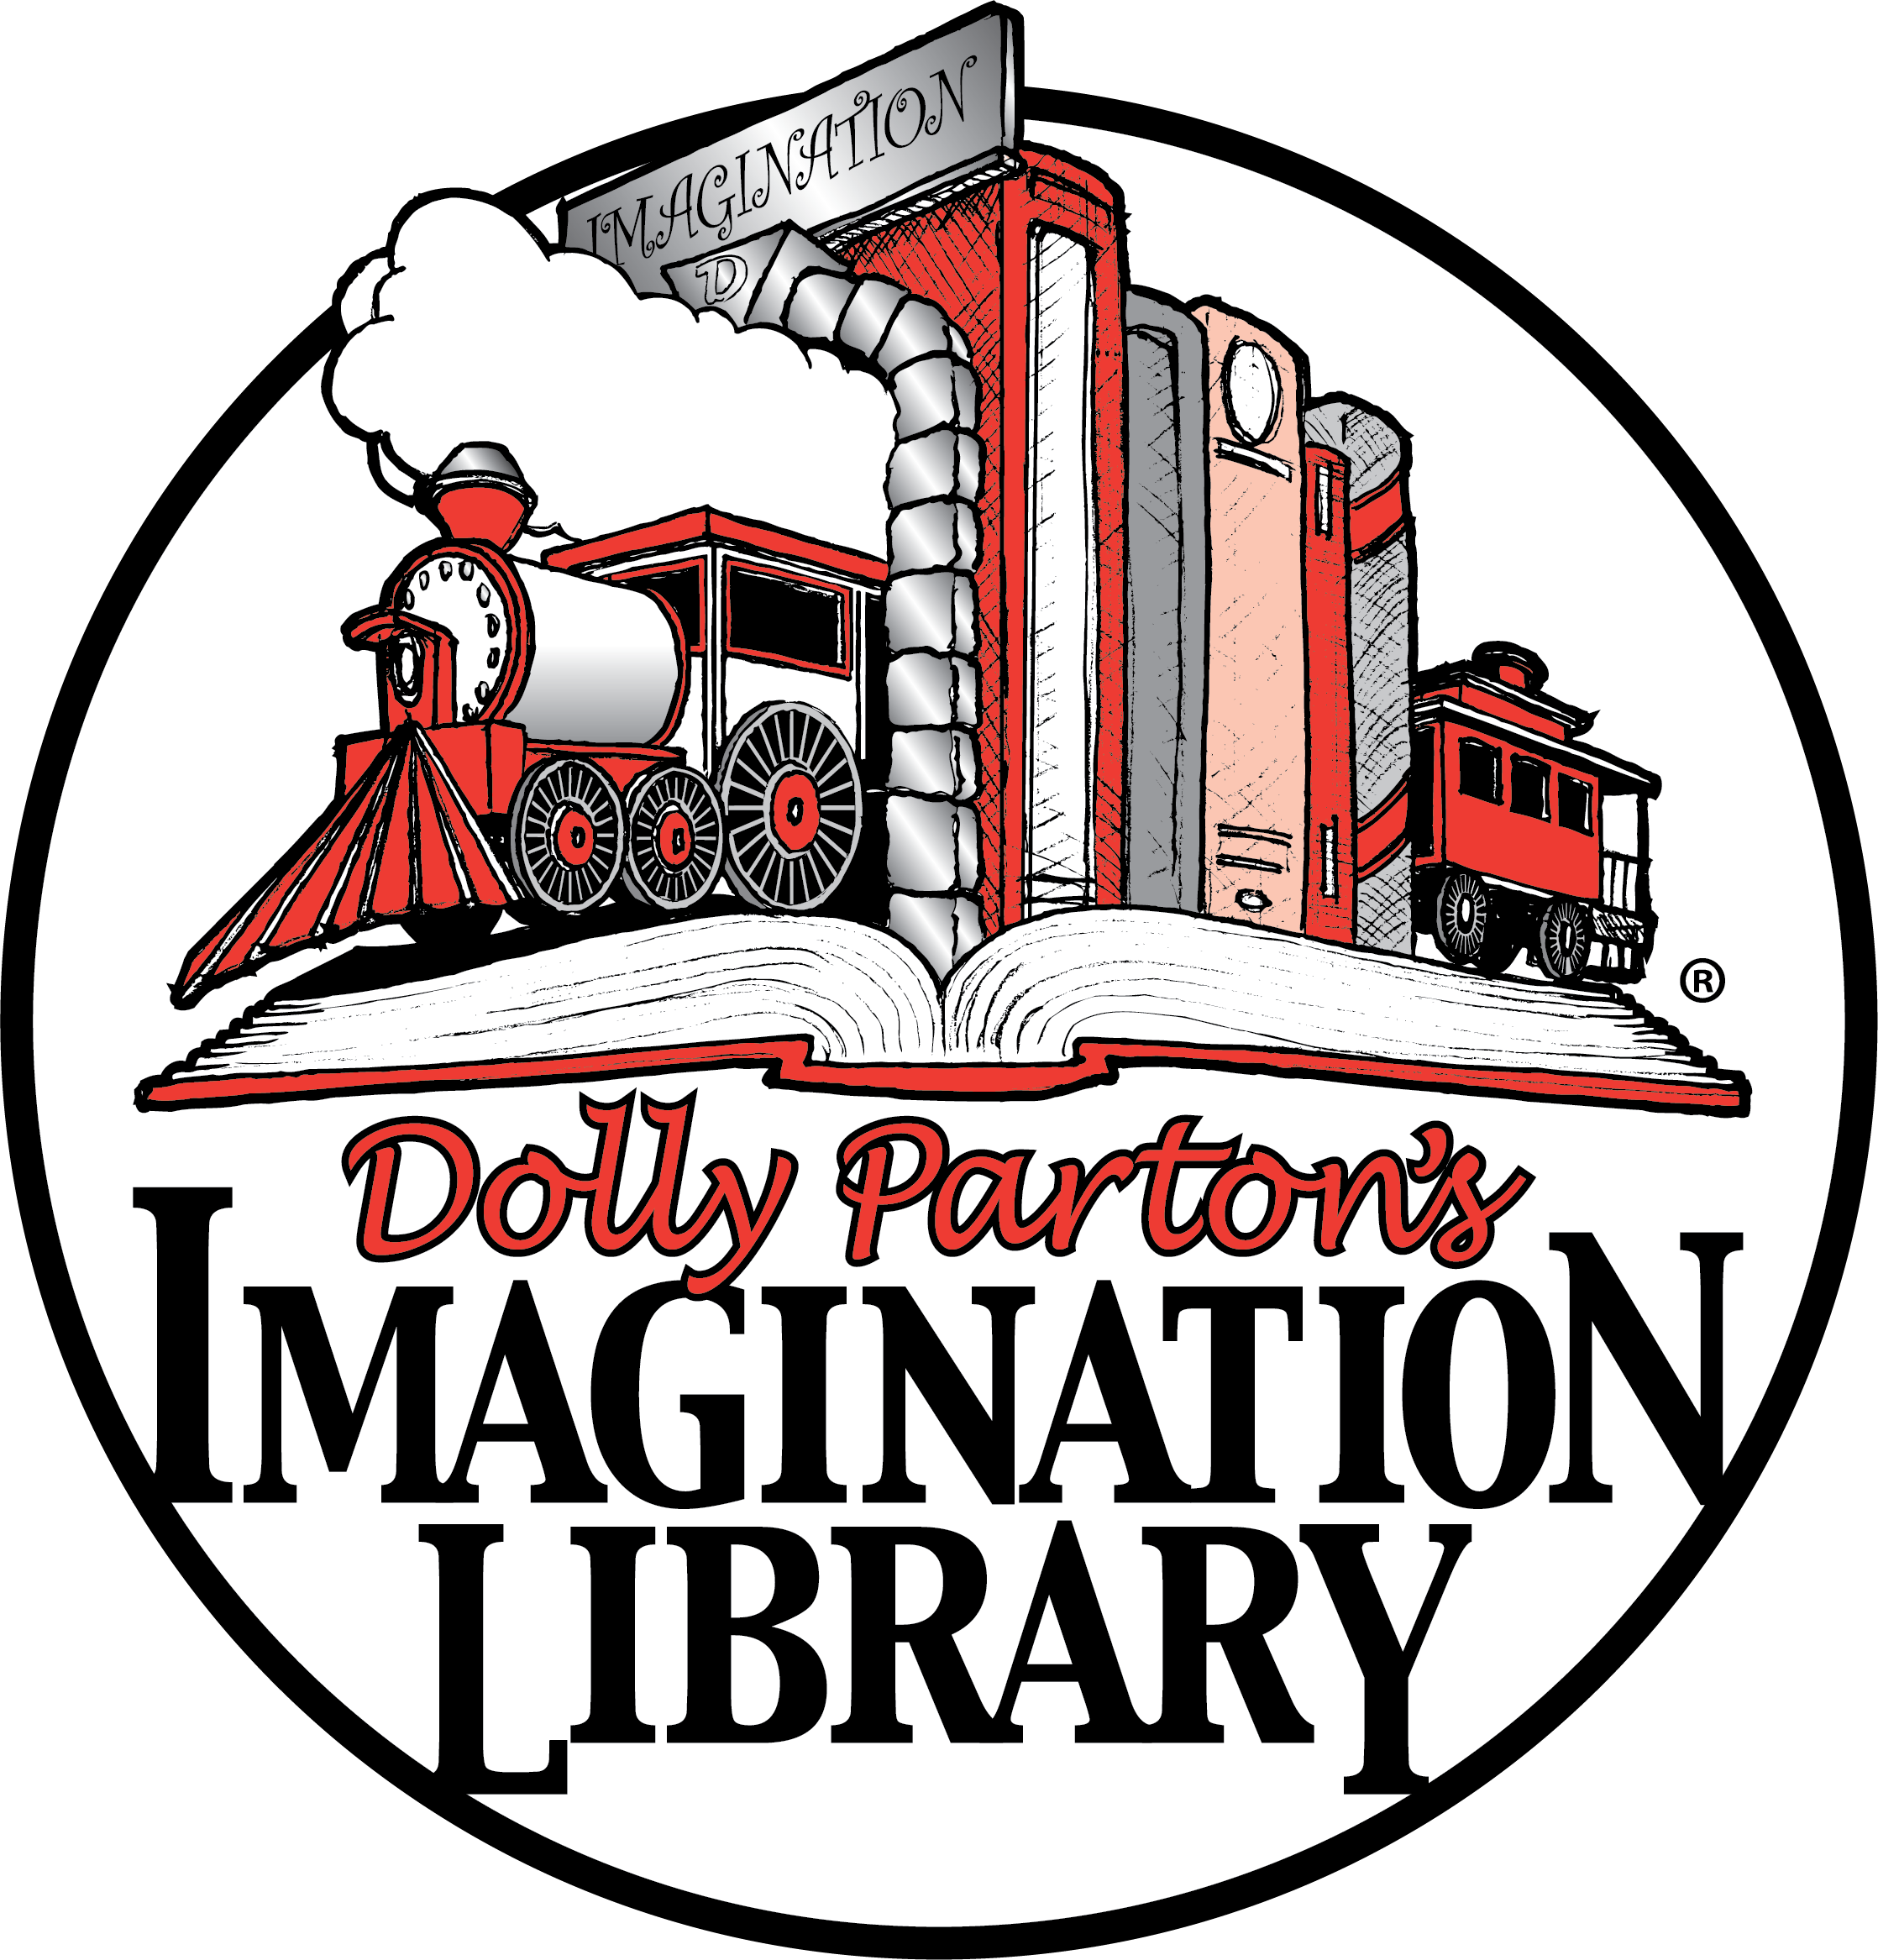 Dolly Parton Imagination Library book train logo